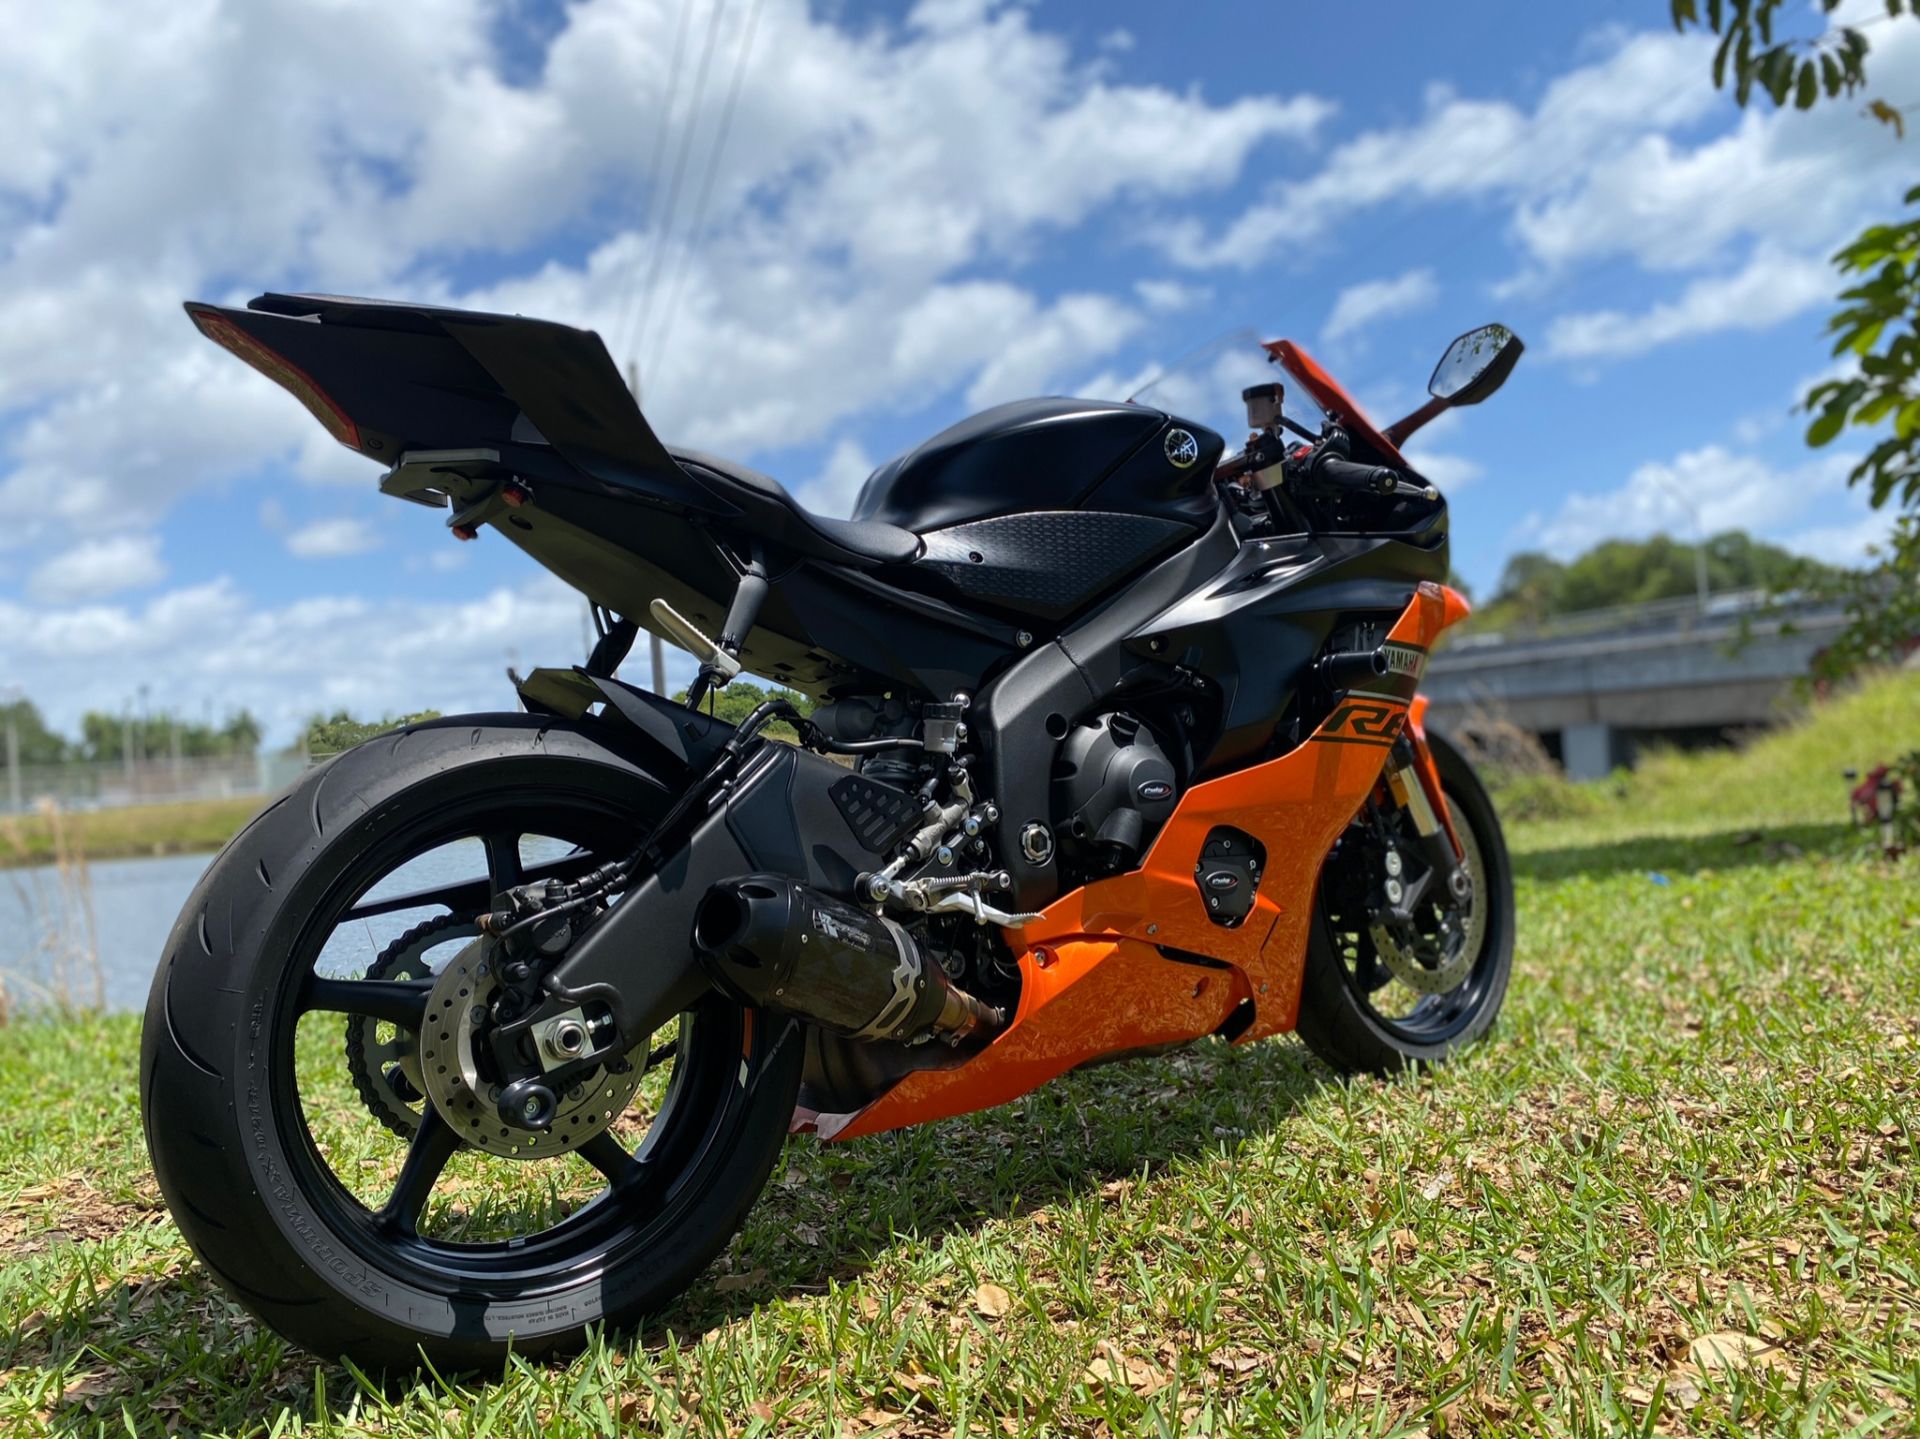 2020 Yamaha YZF-R6 in North Miami Beach, Florida - Photo 4